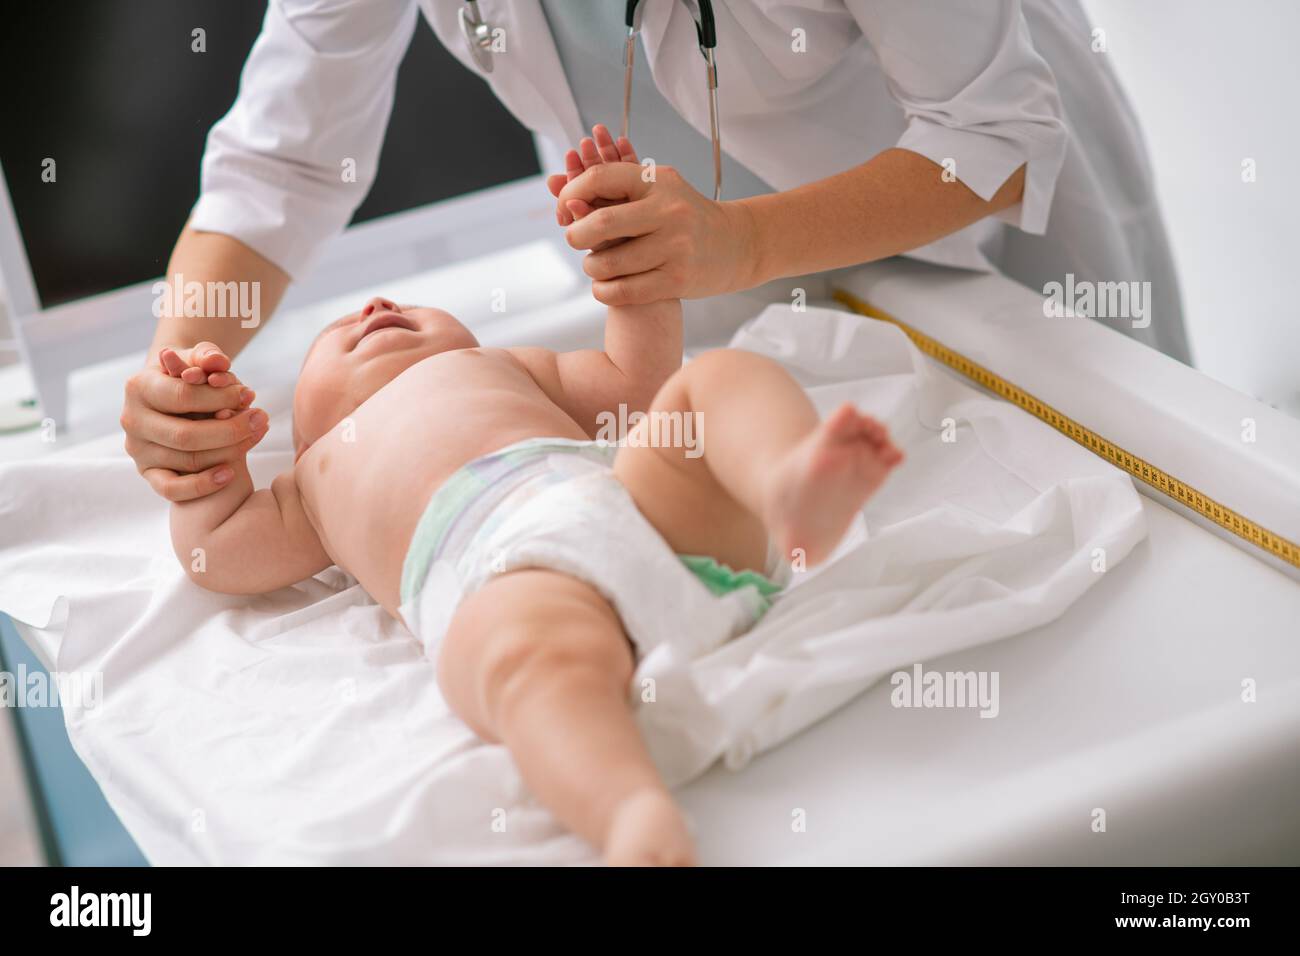 Experienced pediatrician checking the newborn grasp reflex Stock Photo